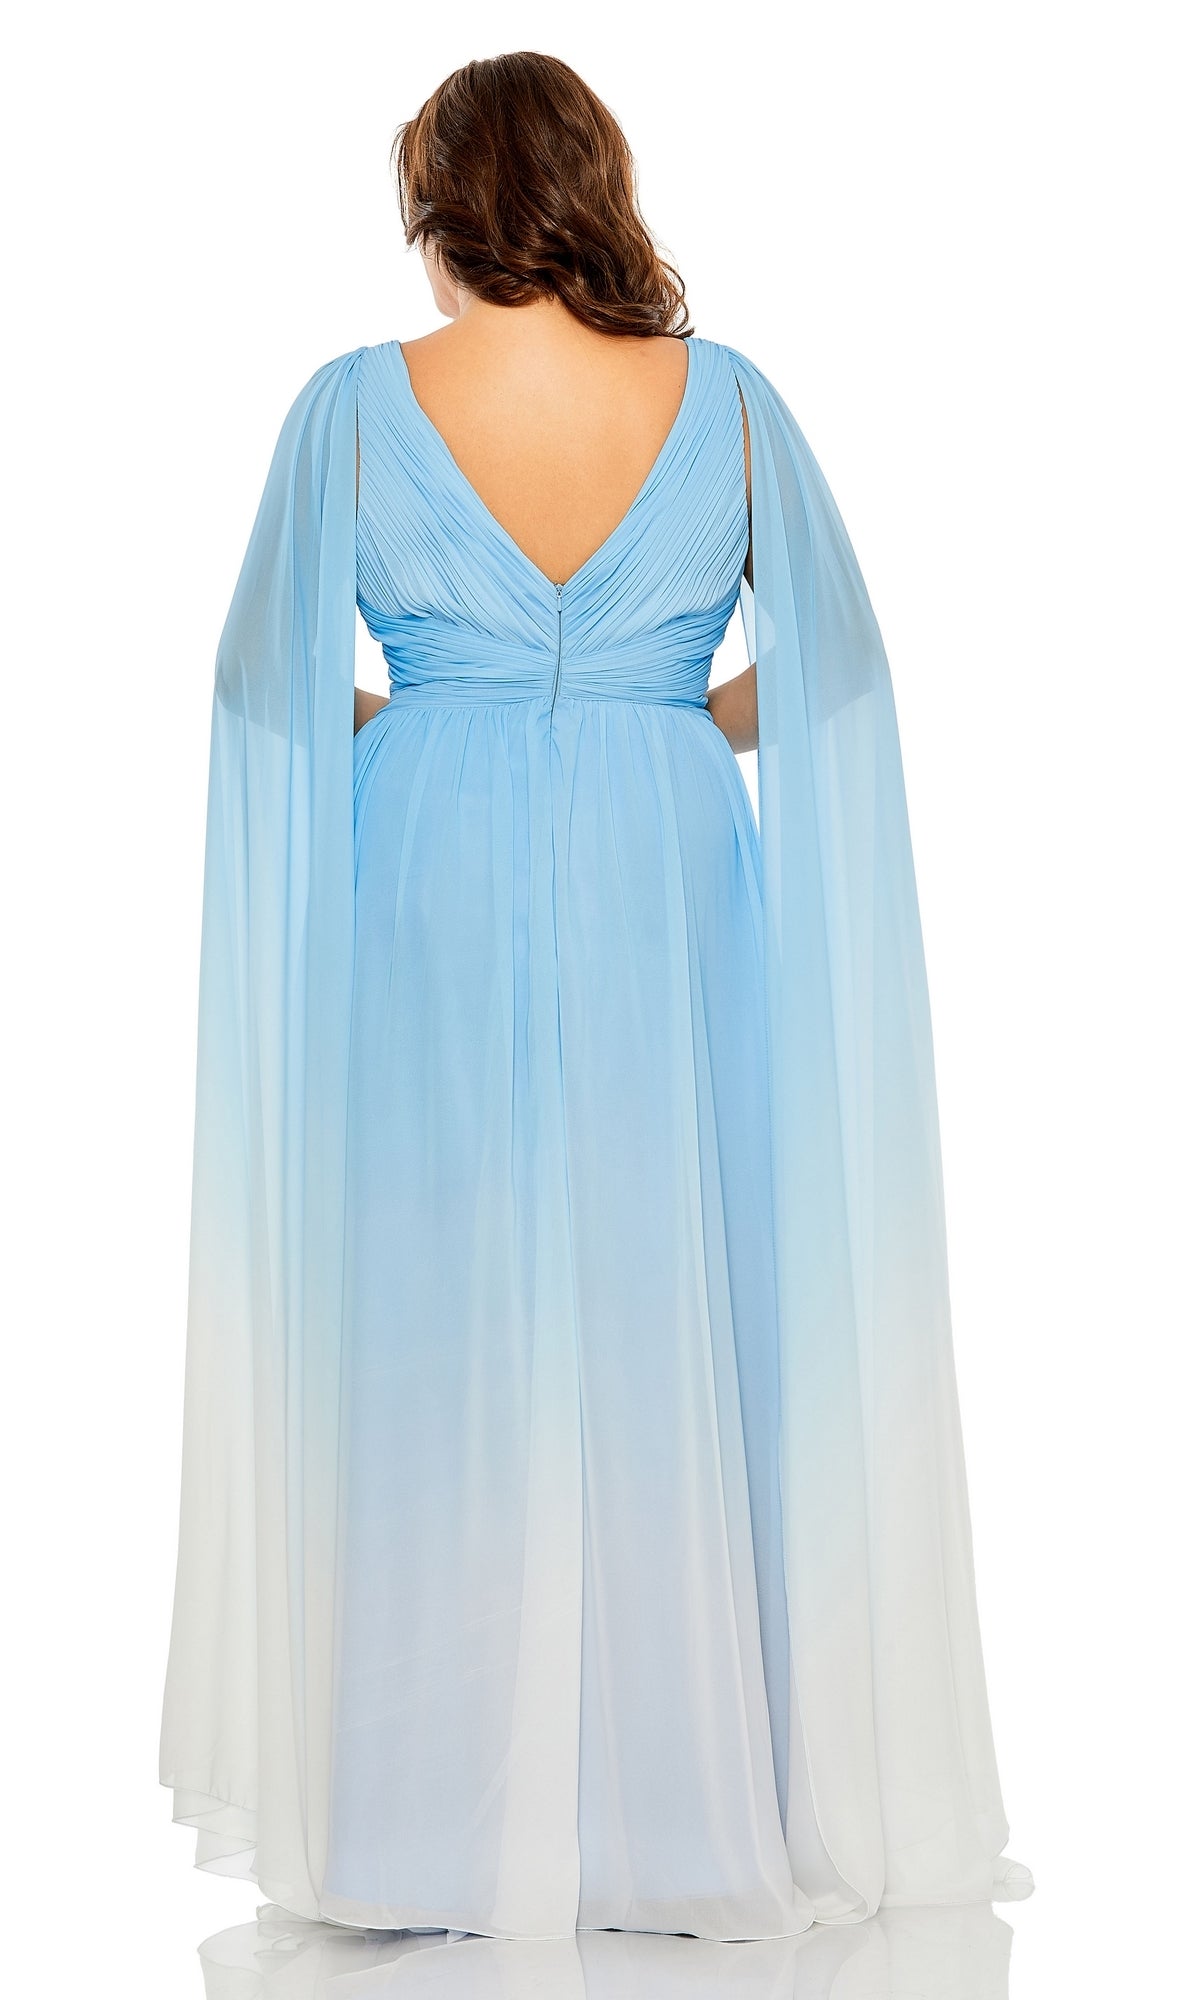 Long Plus-Size Formal Dress 77010 by Mac Duggal